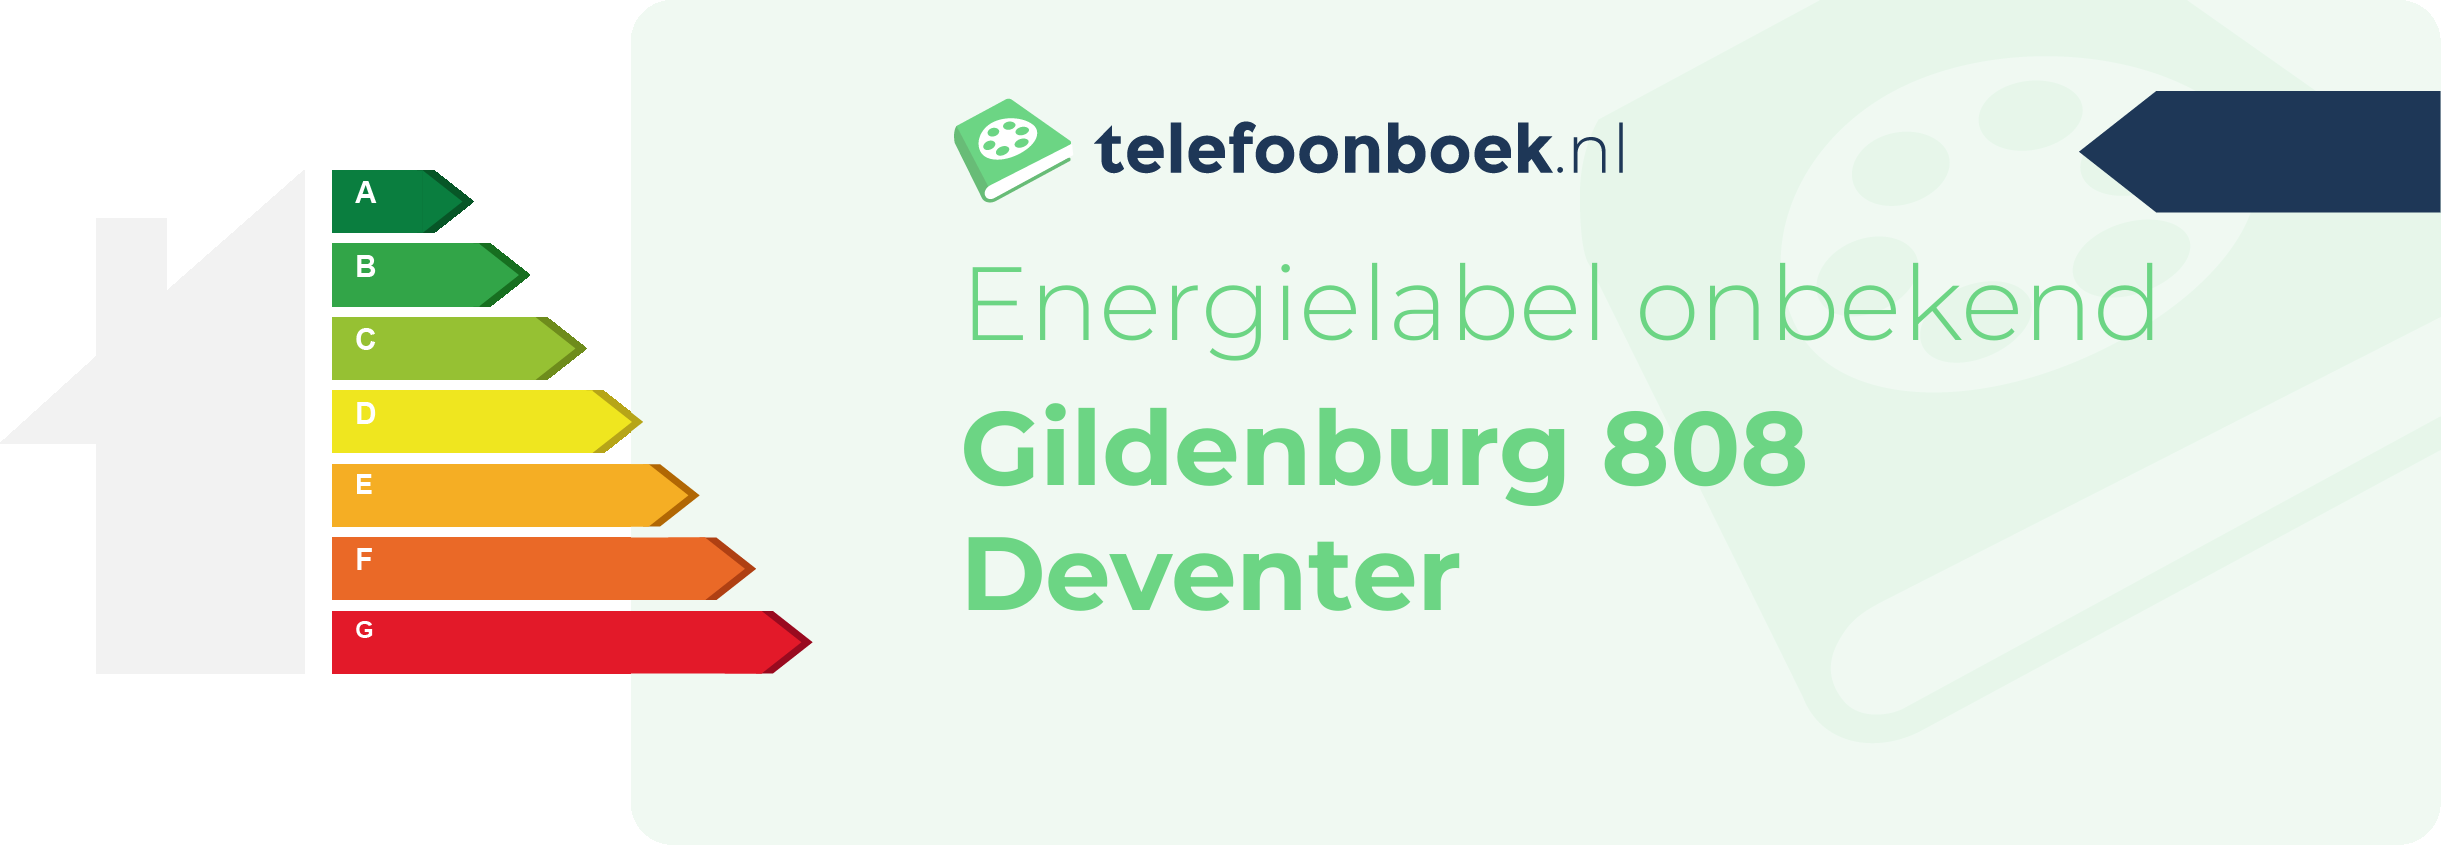 Energielabel Gildenburg 808 Deventer